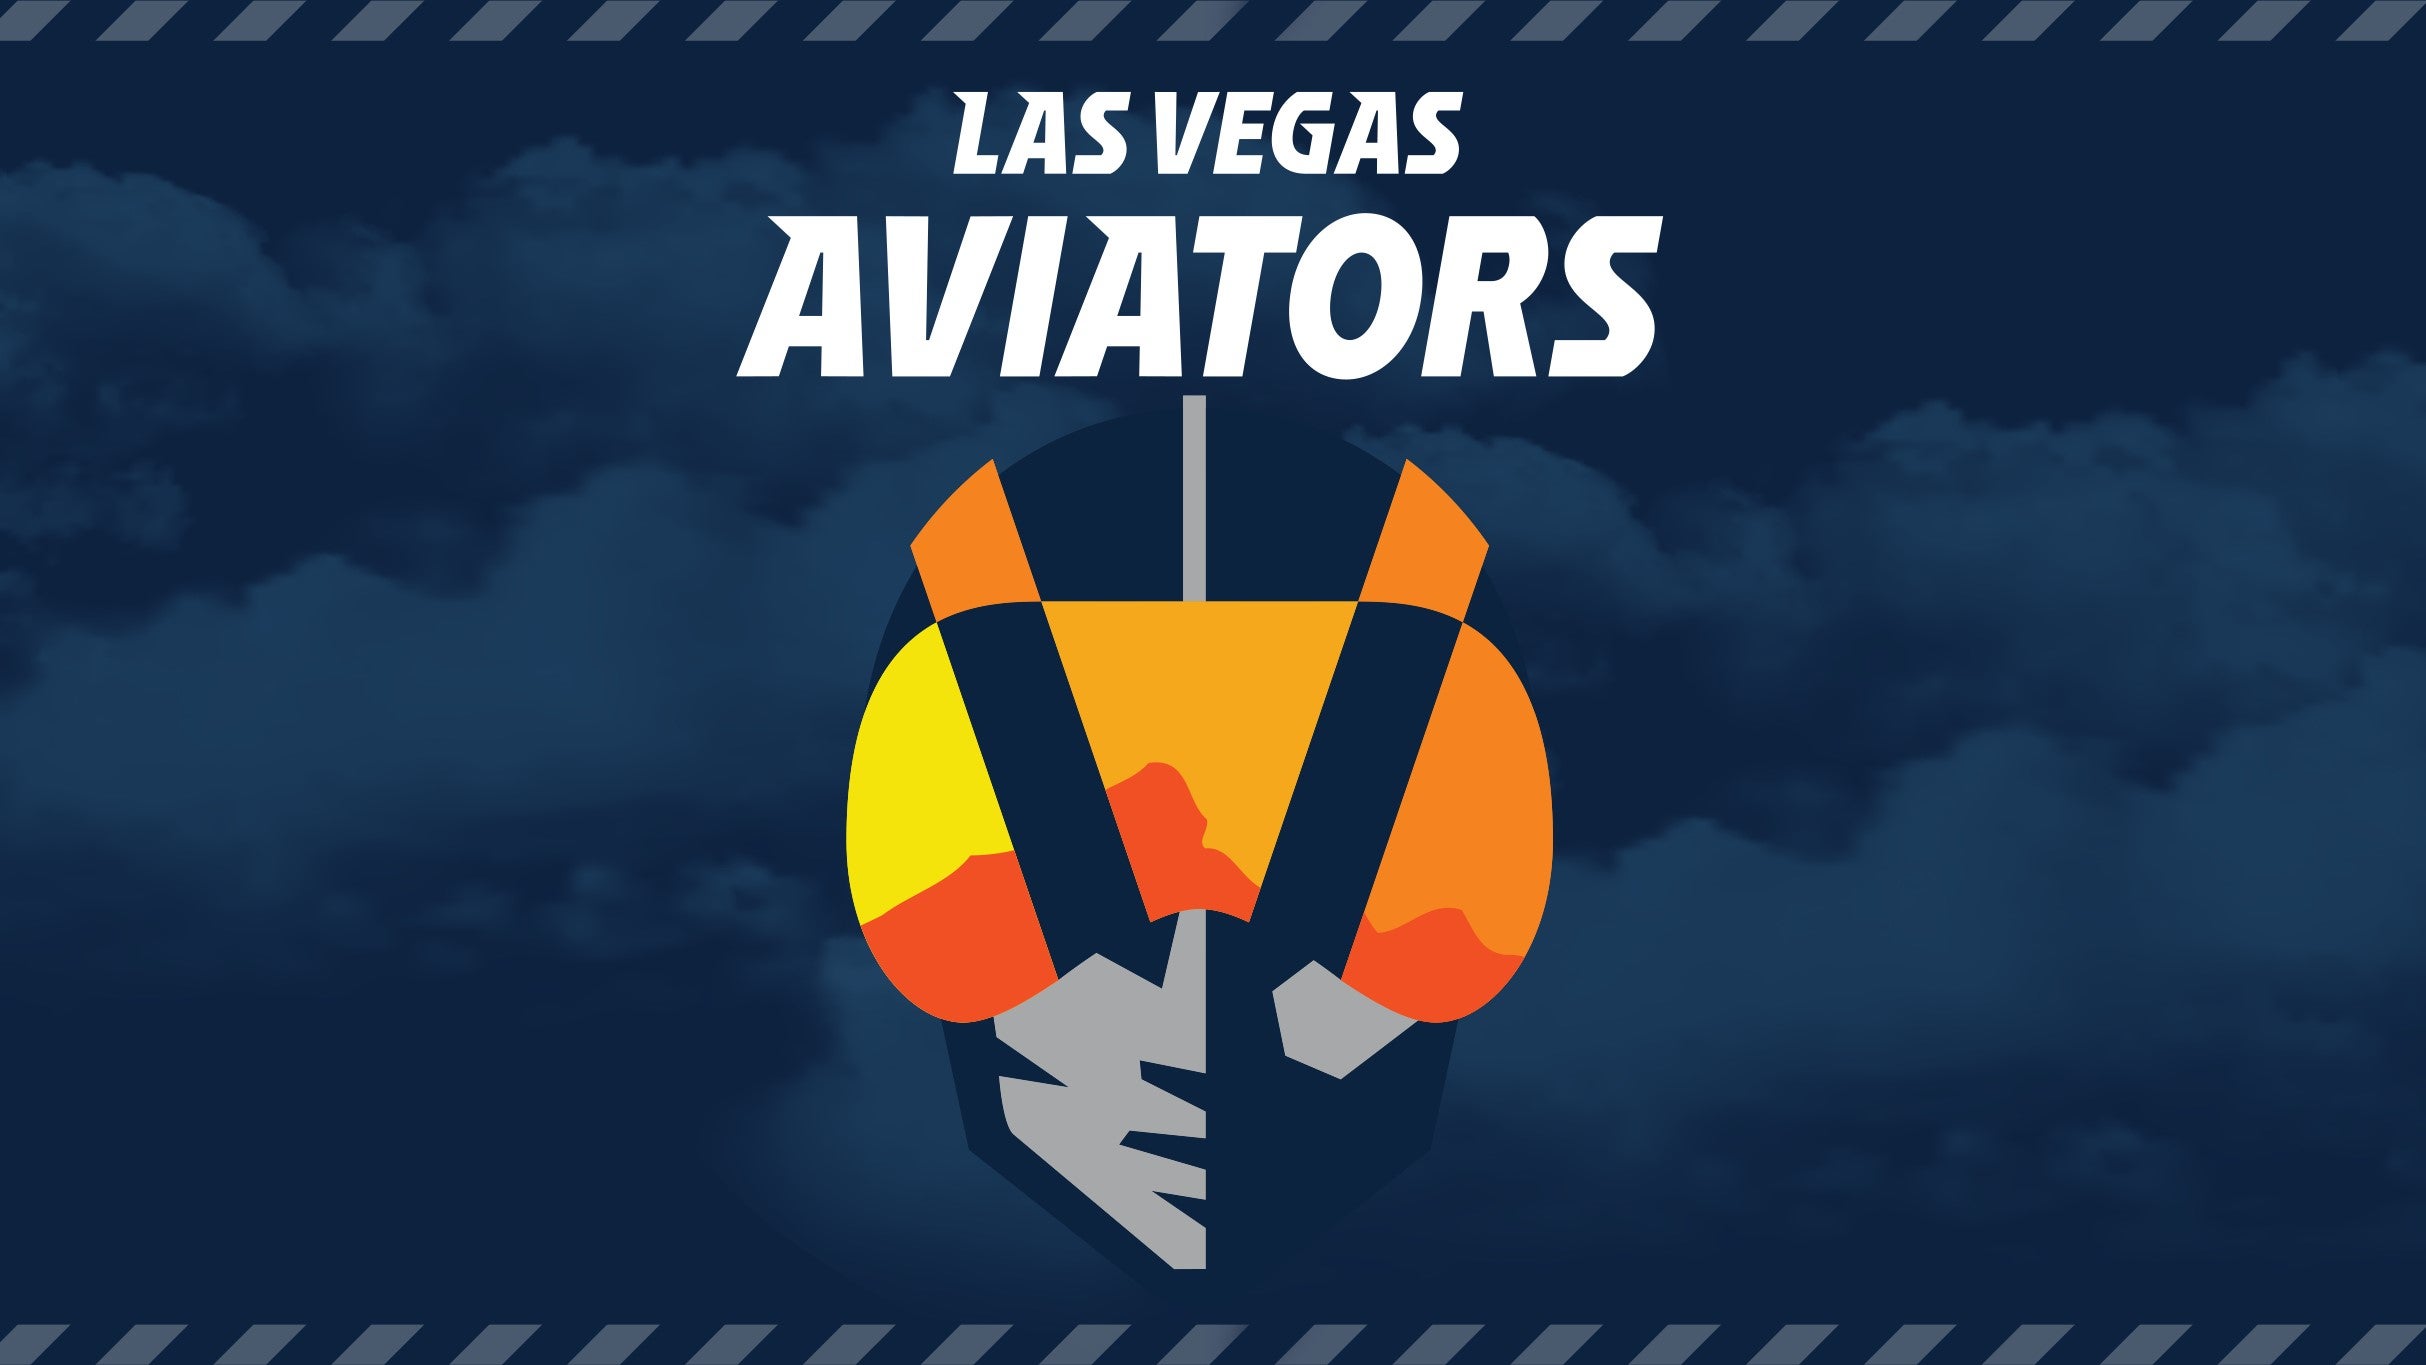 Las Vegas Aviators vs. Salt Lake Bees presales in Las Vegas